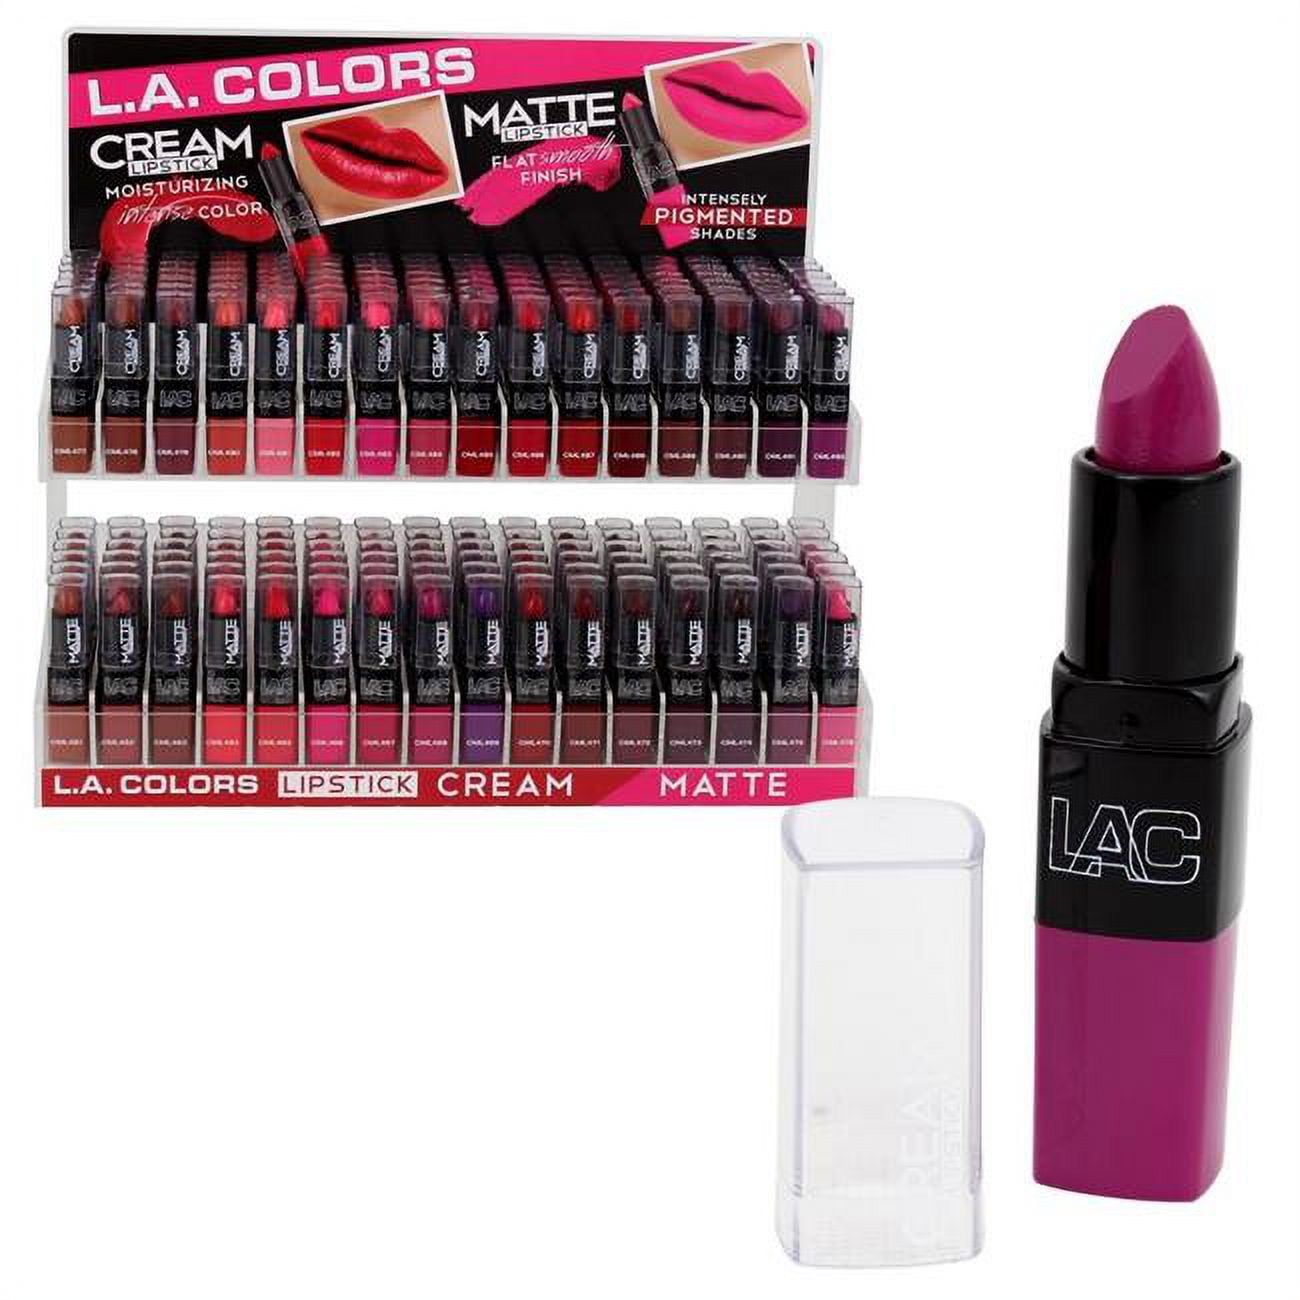 2337146 0.13 Oz L.a. Colors Cream & Matte Lipstick Assortment In Display - Case Of 384